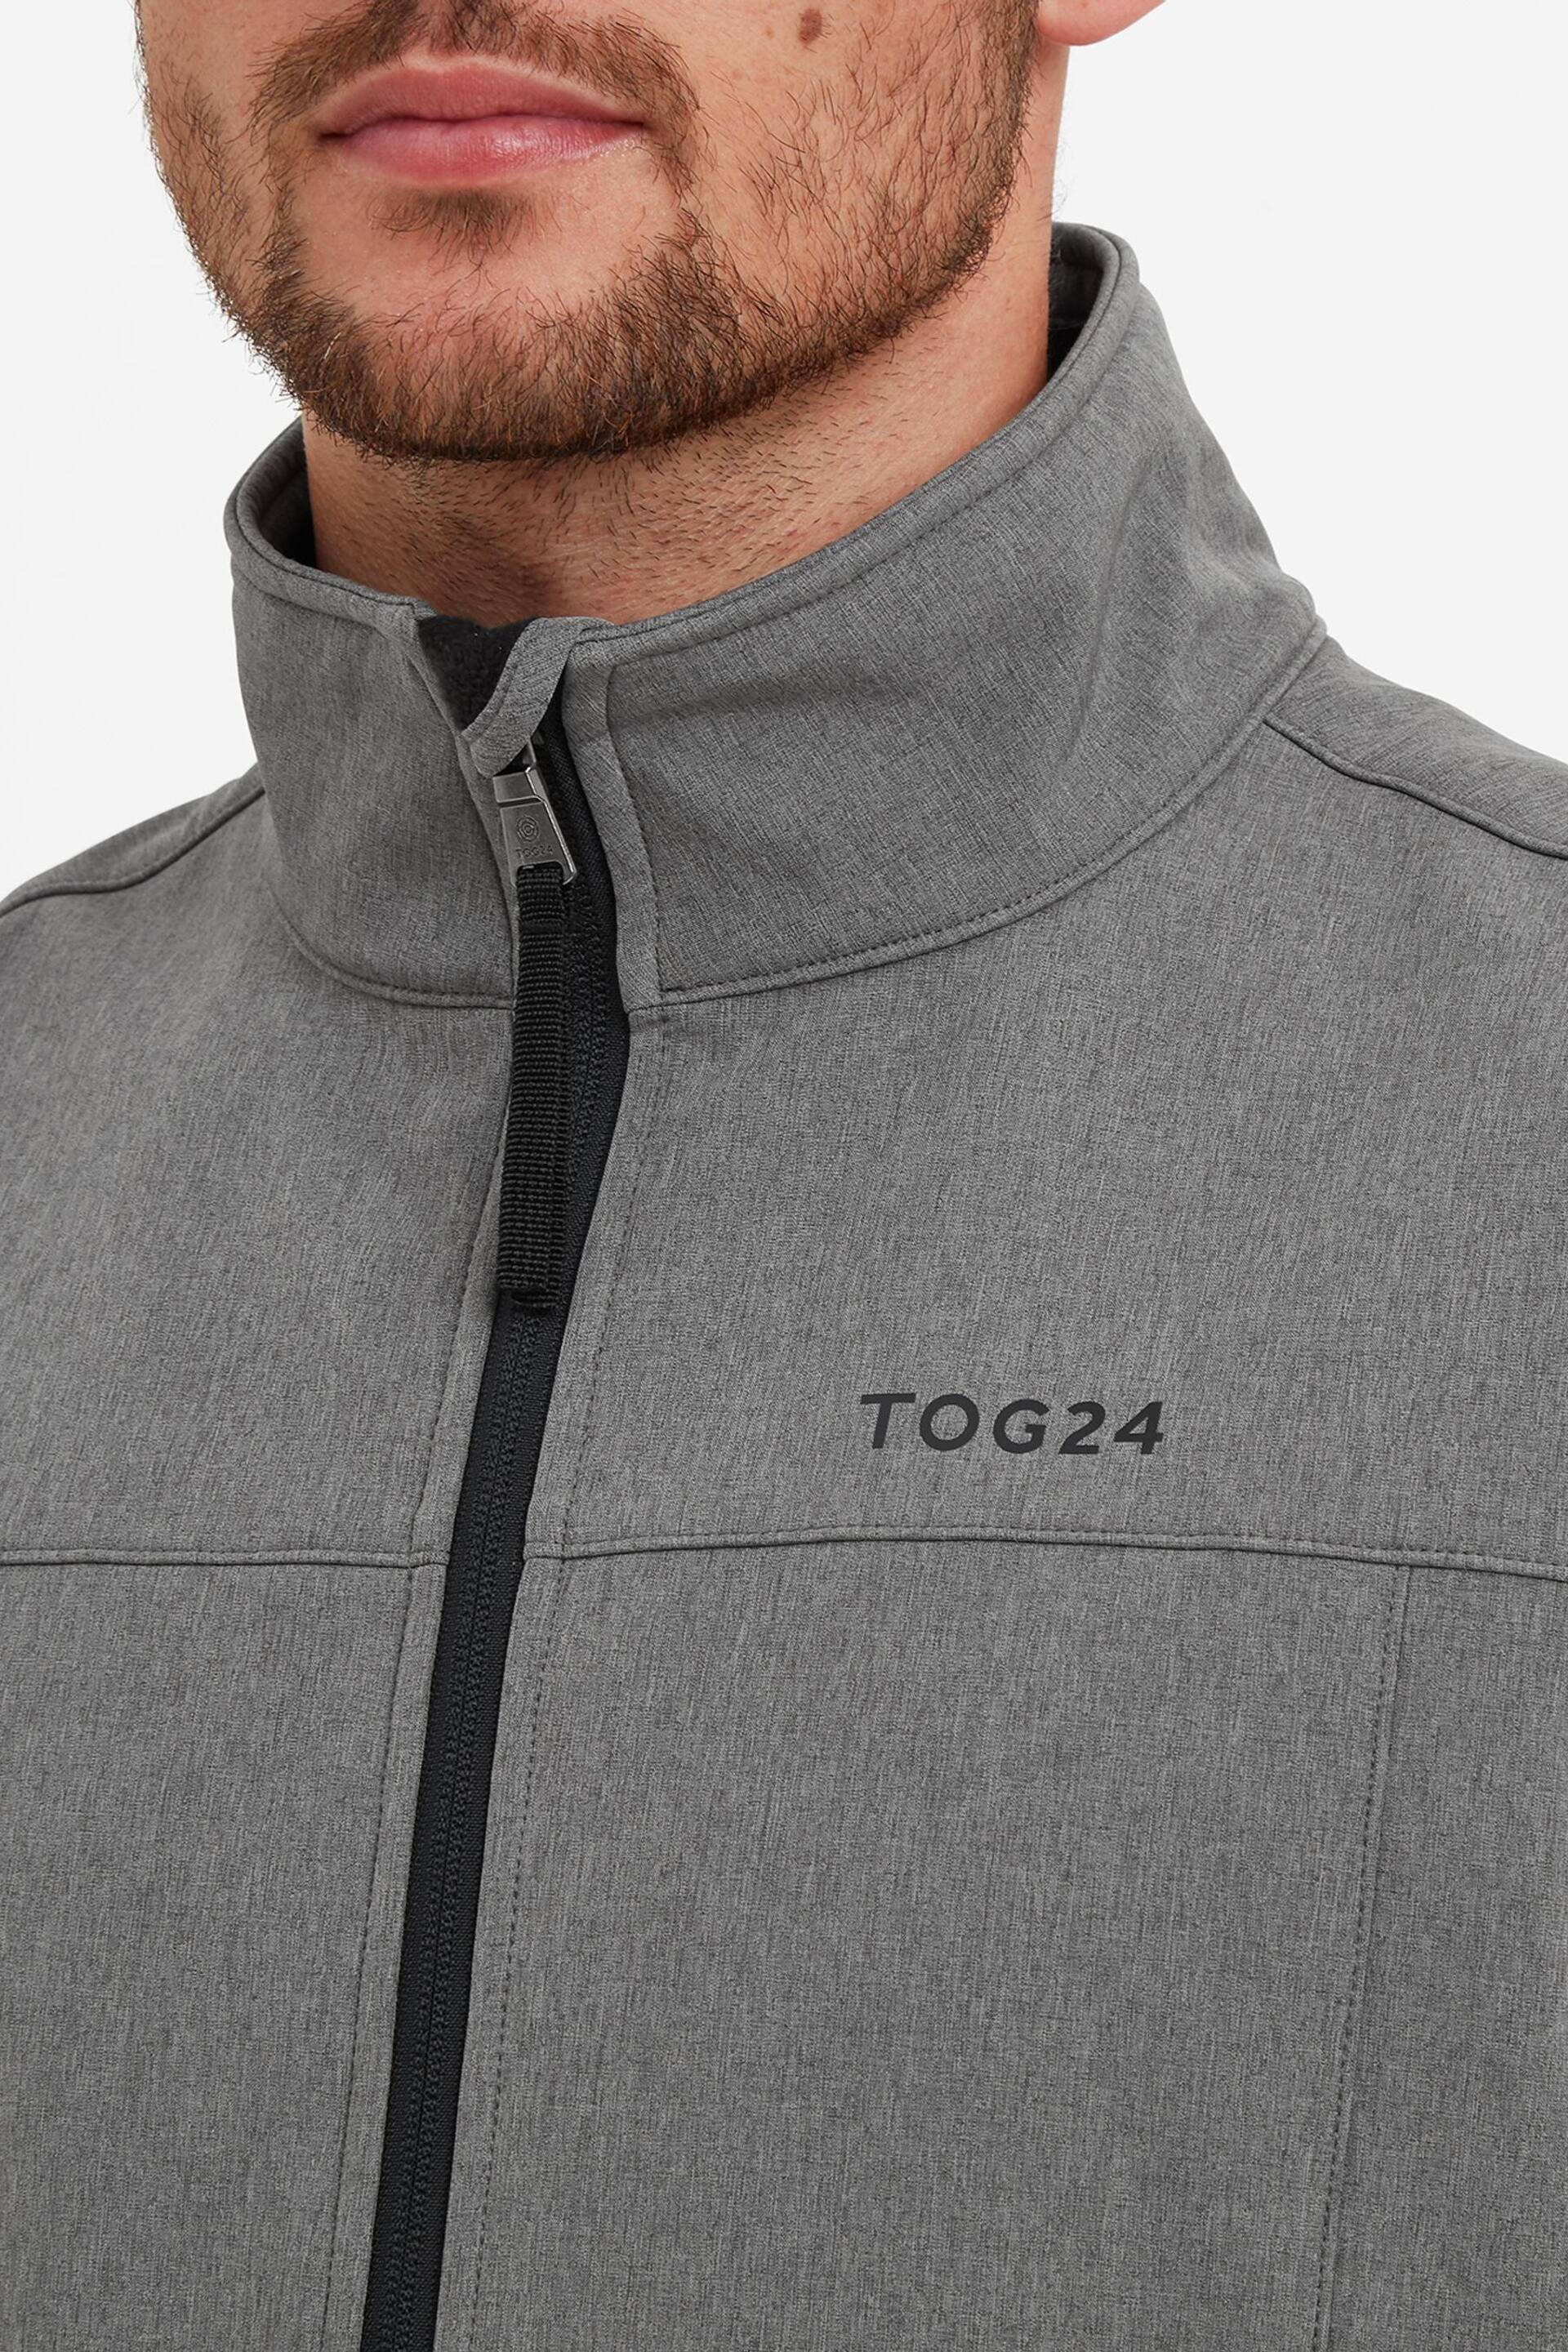 Tog 24 Grey Feizor Softshell Zip Jacket - Image 2 of 4